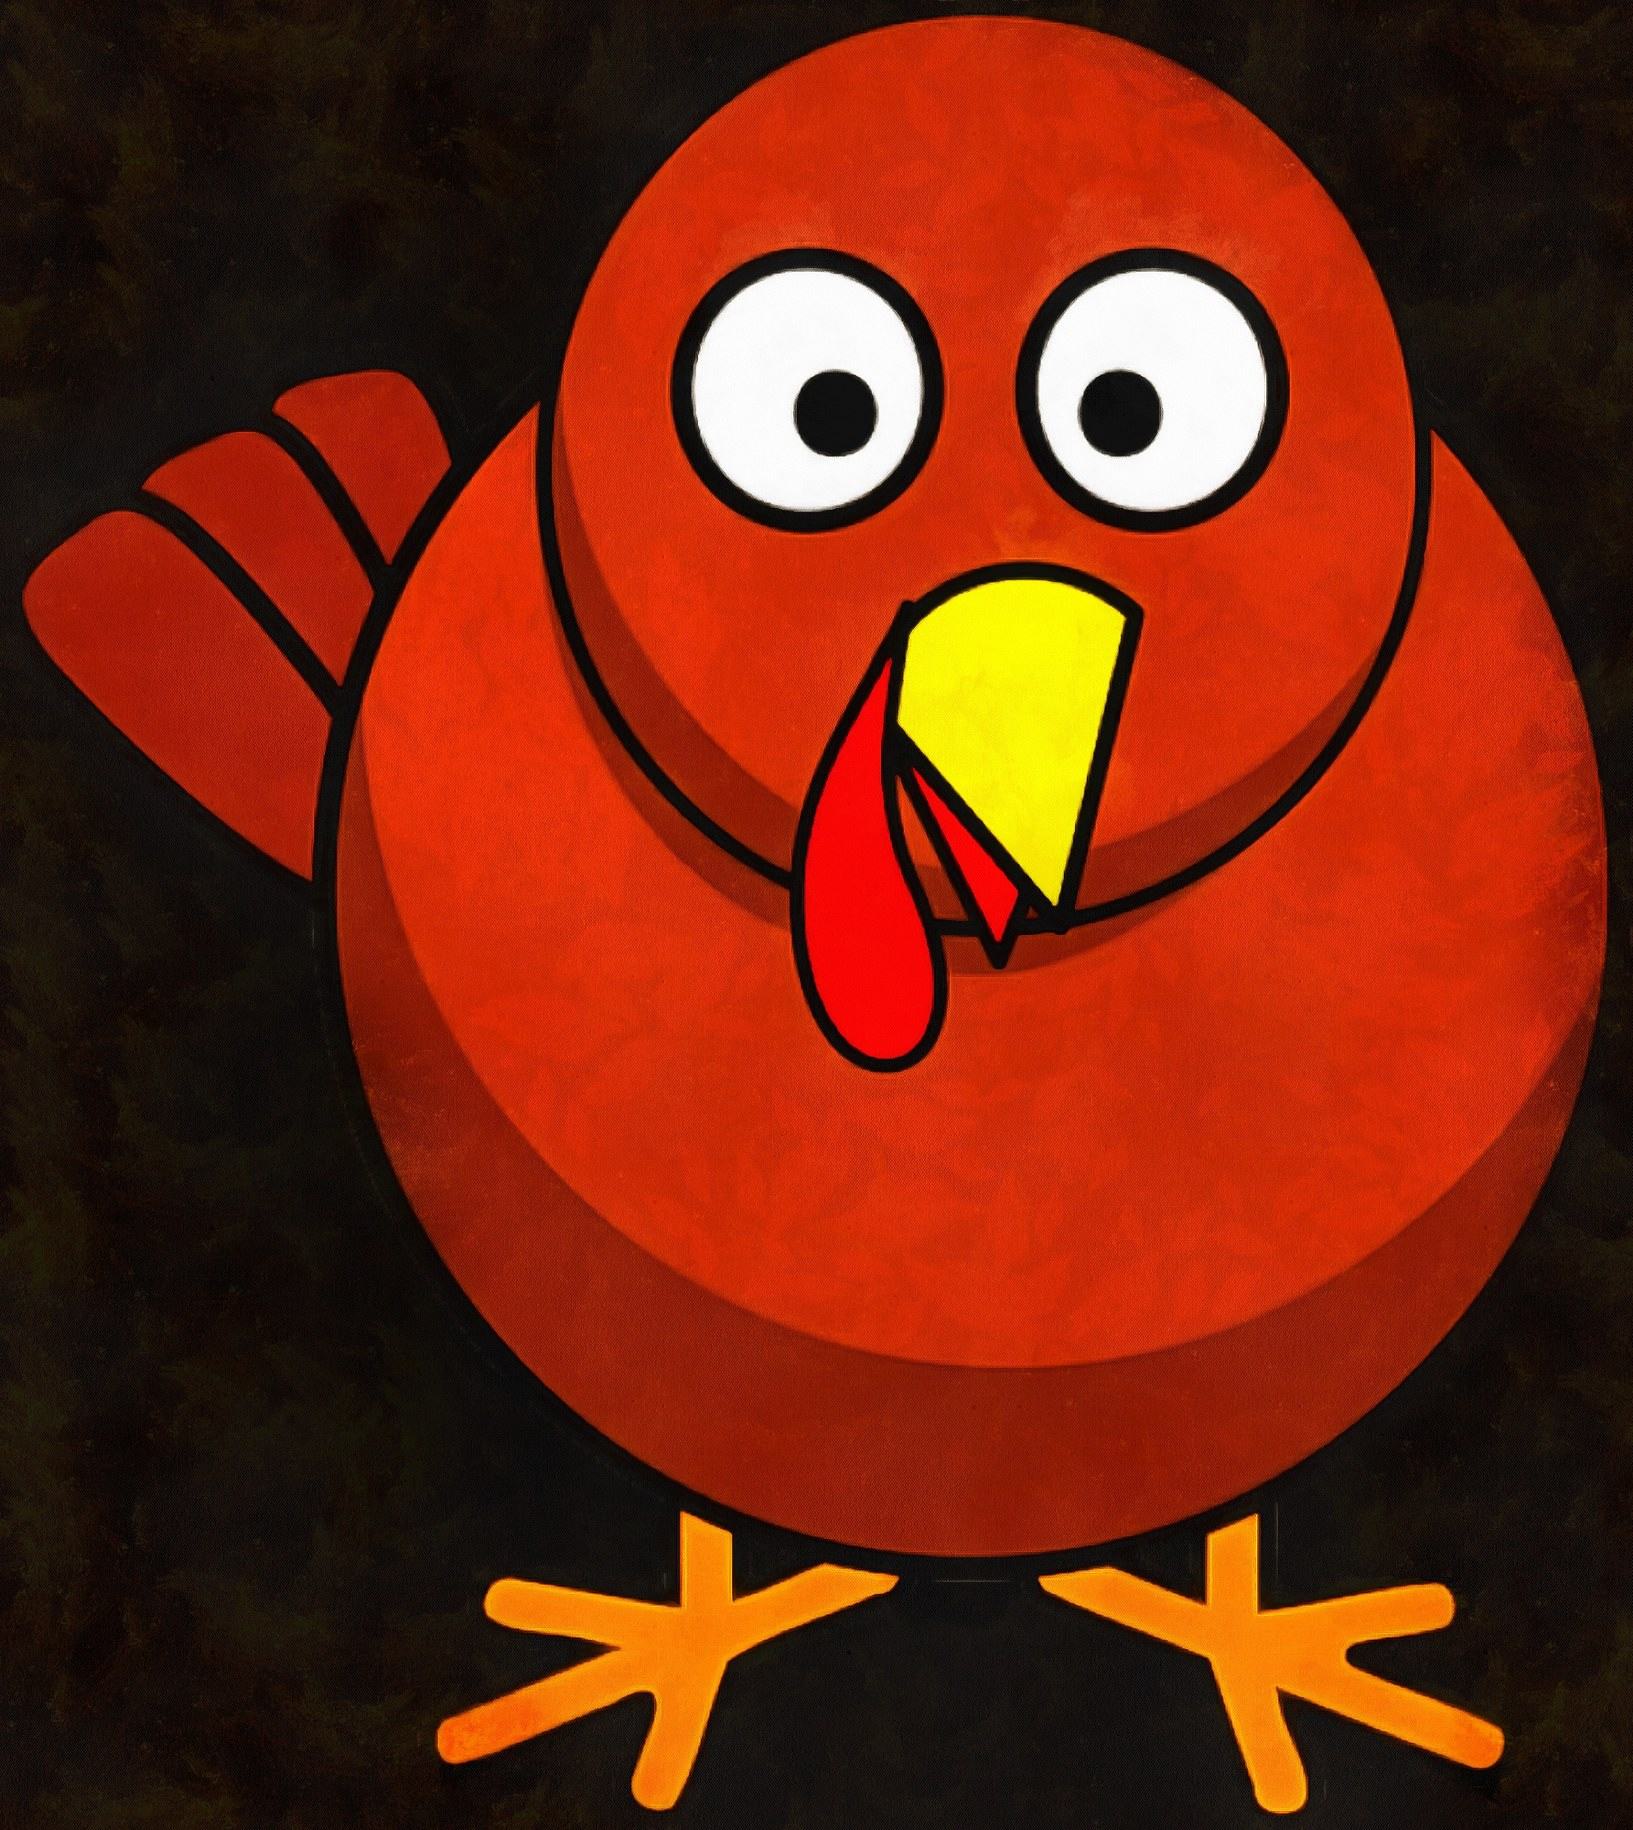 thanksgiving, turkey, live turkey, bird, holiday, Thanksgiving Day,   - thanksgiving, stock free image, public domain photos, free stock photo, download public domain images.